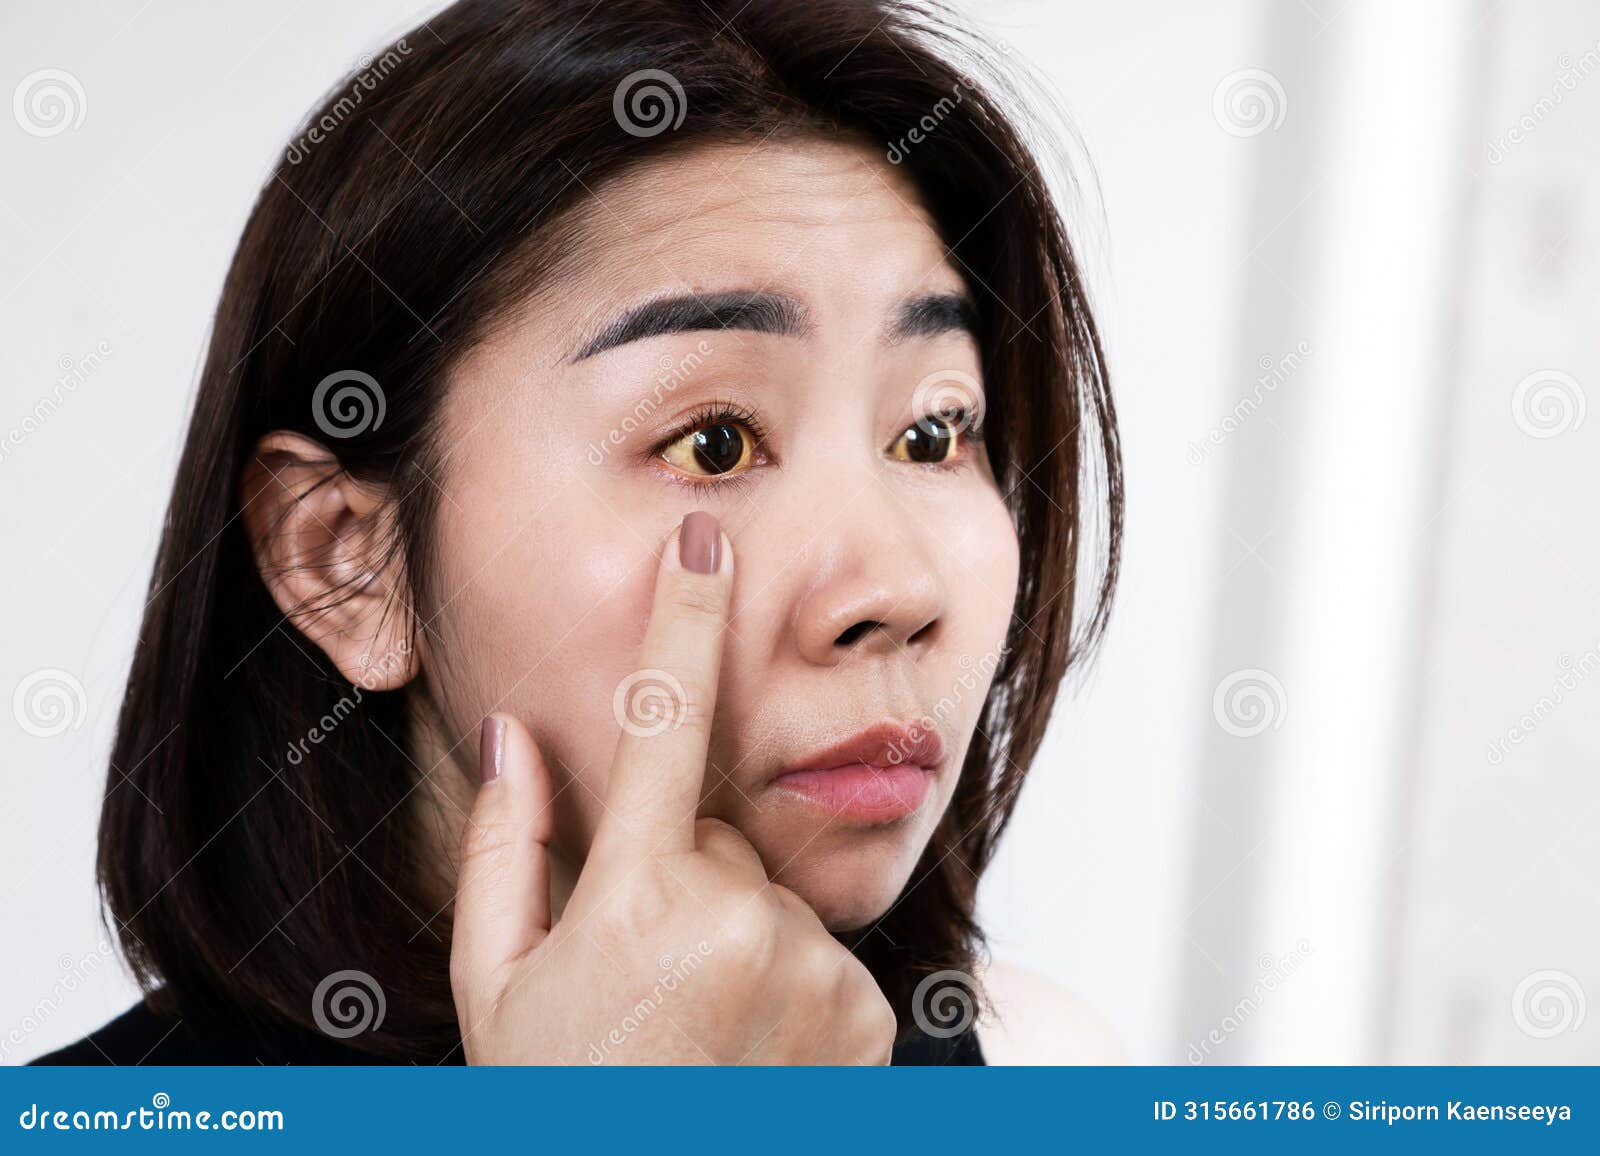 asian woman having yellow eyes concept of jaundice eyes or viral hepatitis